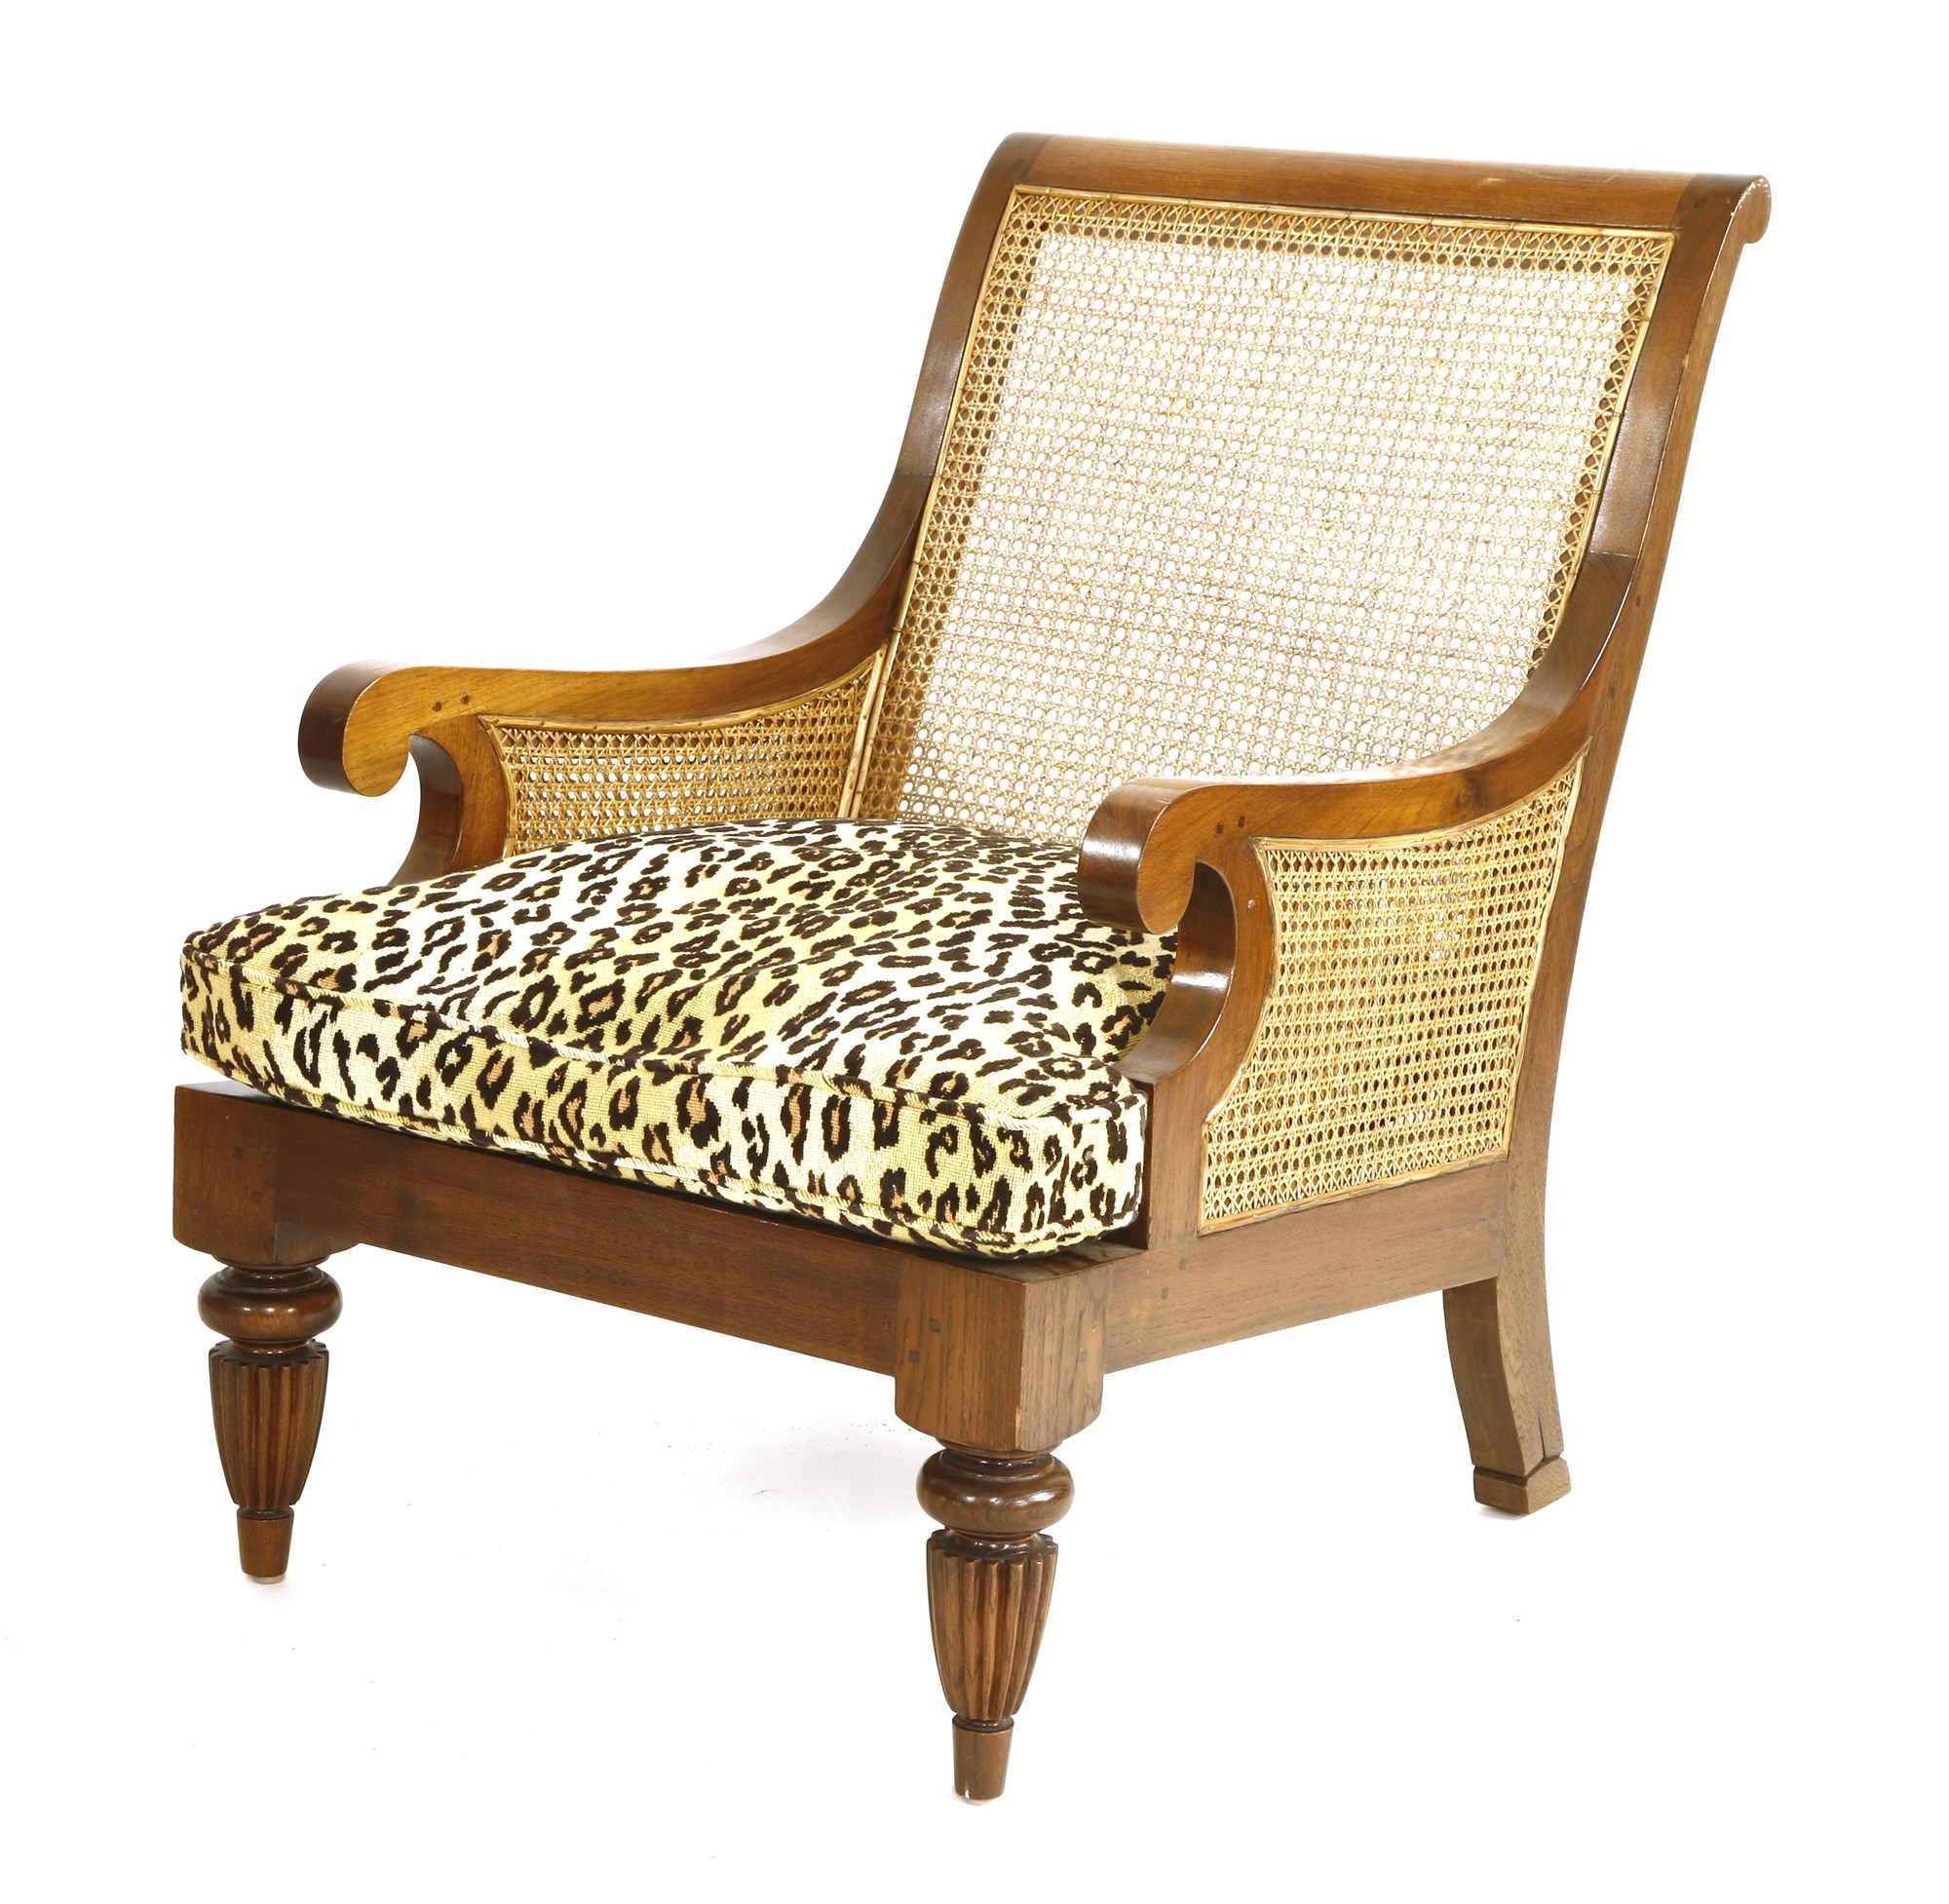 A teak chair with faux leopard cushion cover